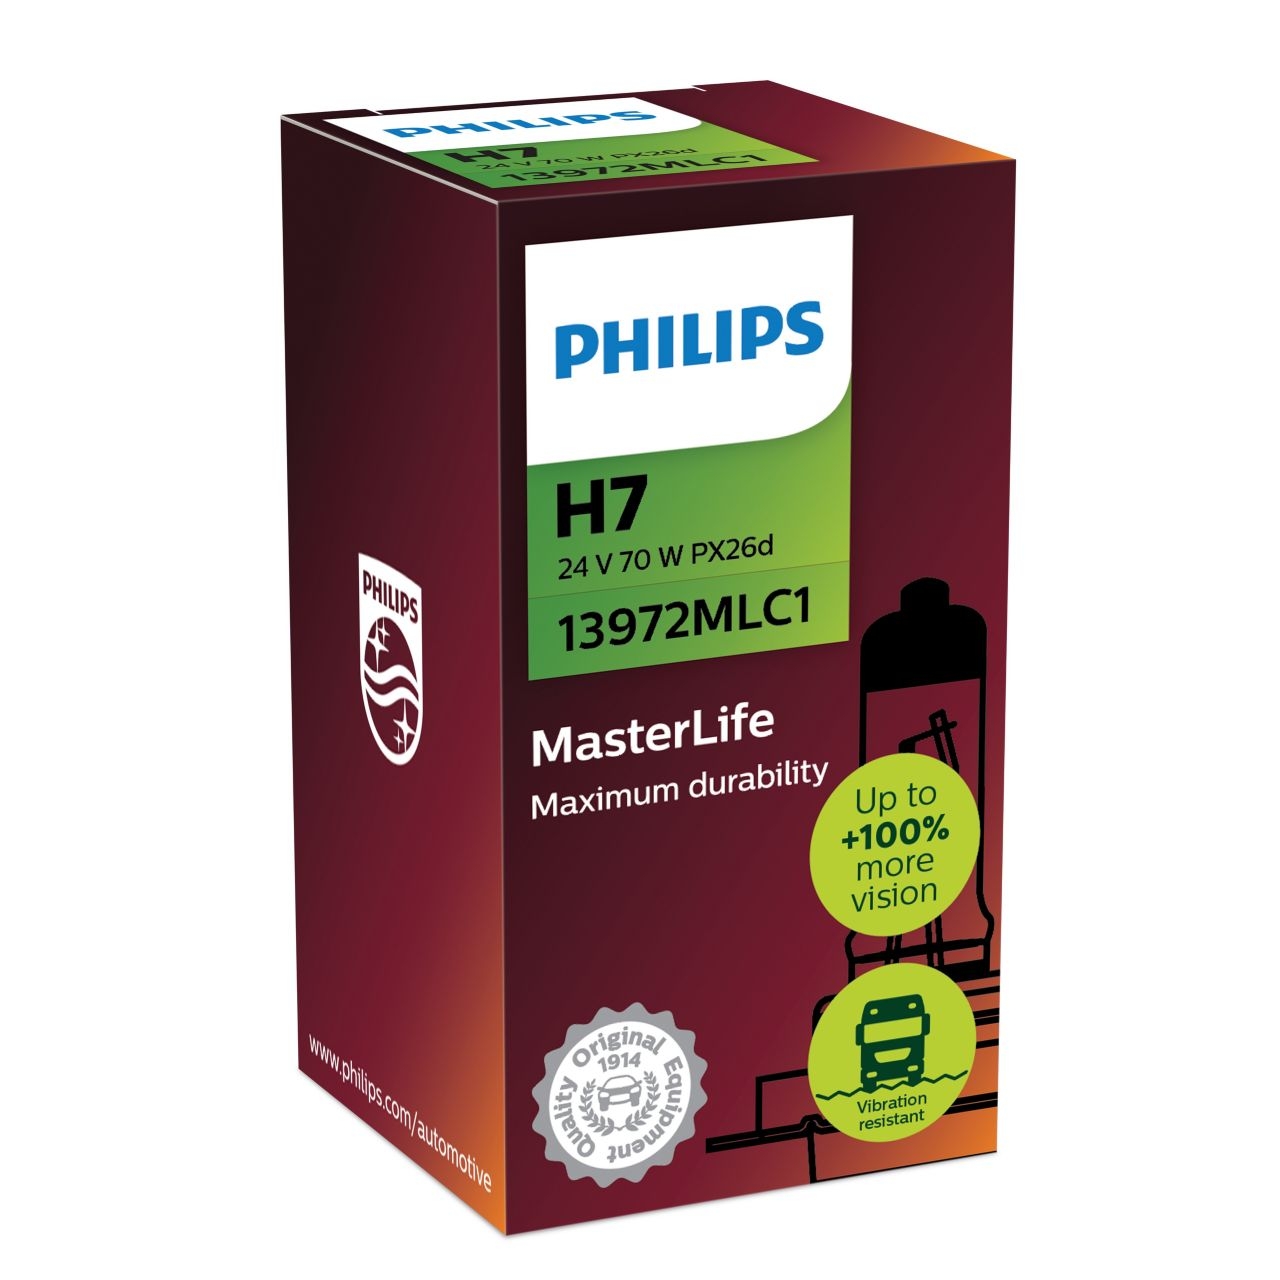 Philips H7 24V 70W 13972MLC1 MasterLife Halogen Lampe, LKW Beleuchtung